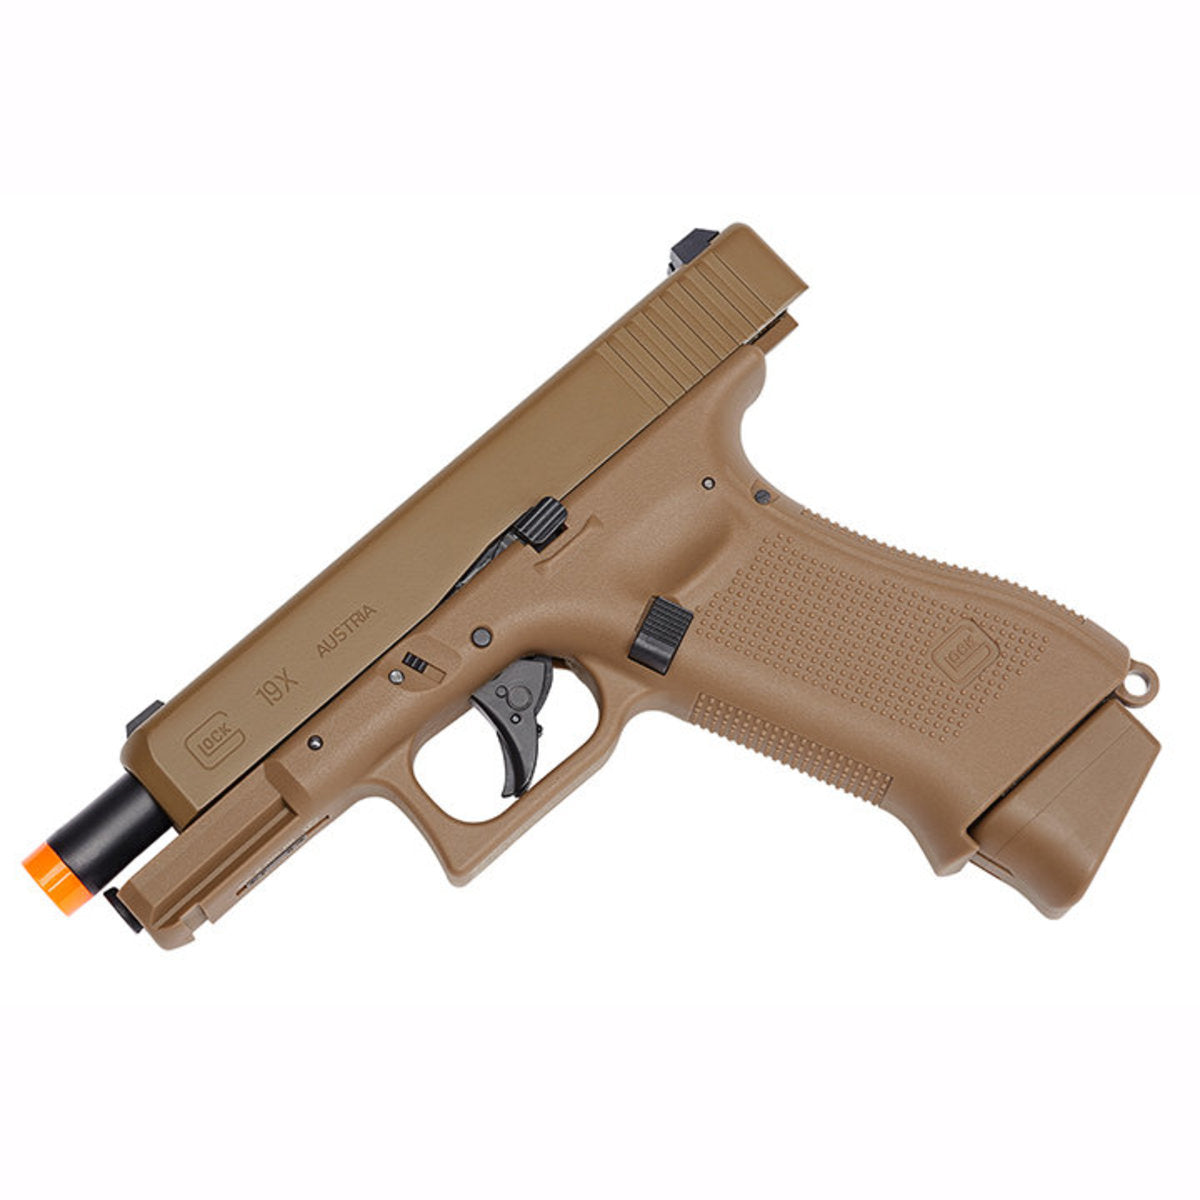 Umarex Glock 19X Co2 Half-Blowback Airsoft Pistol